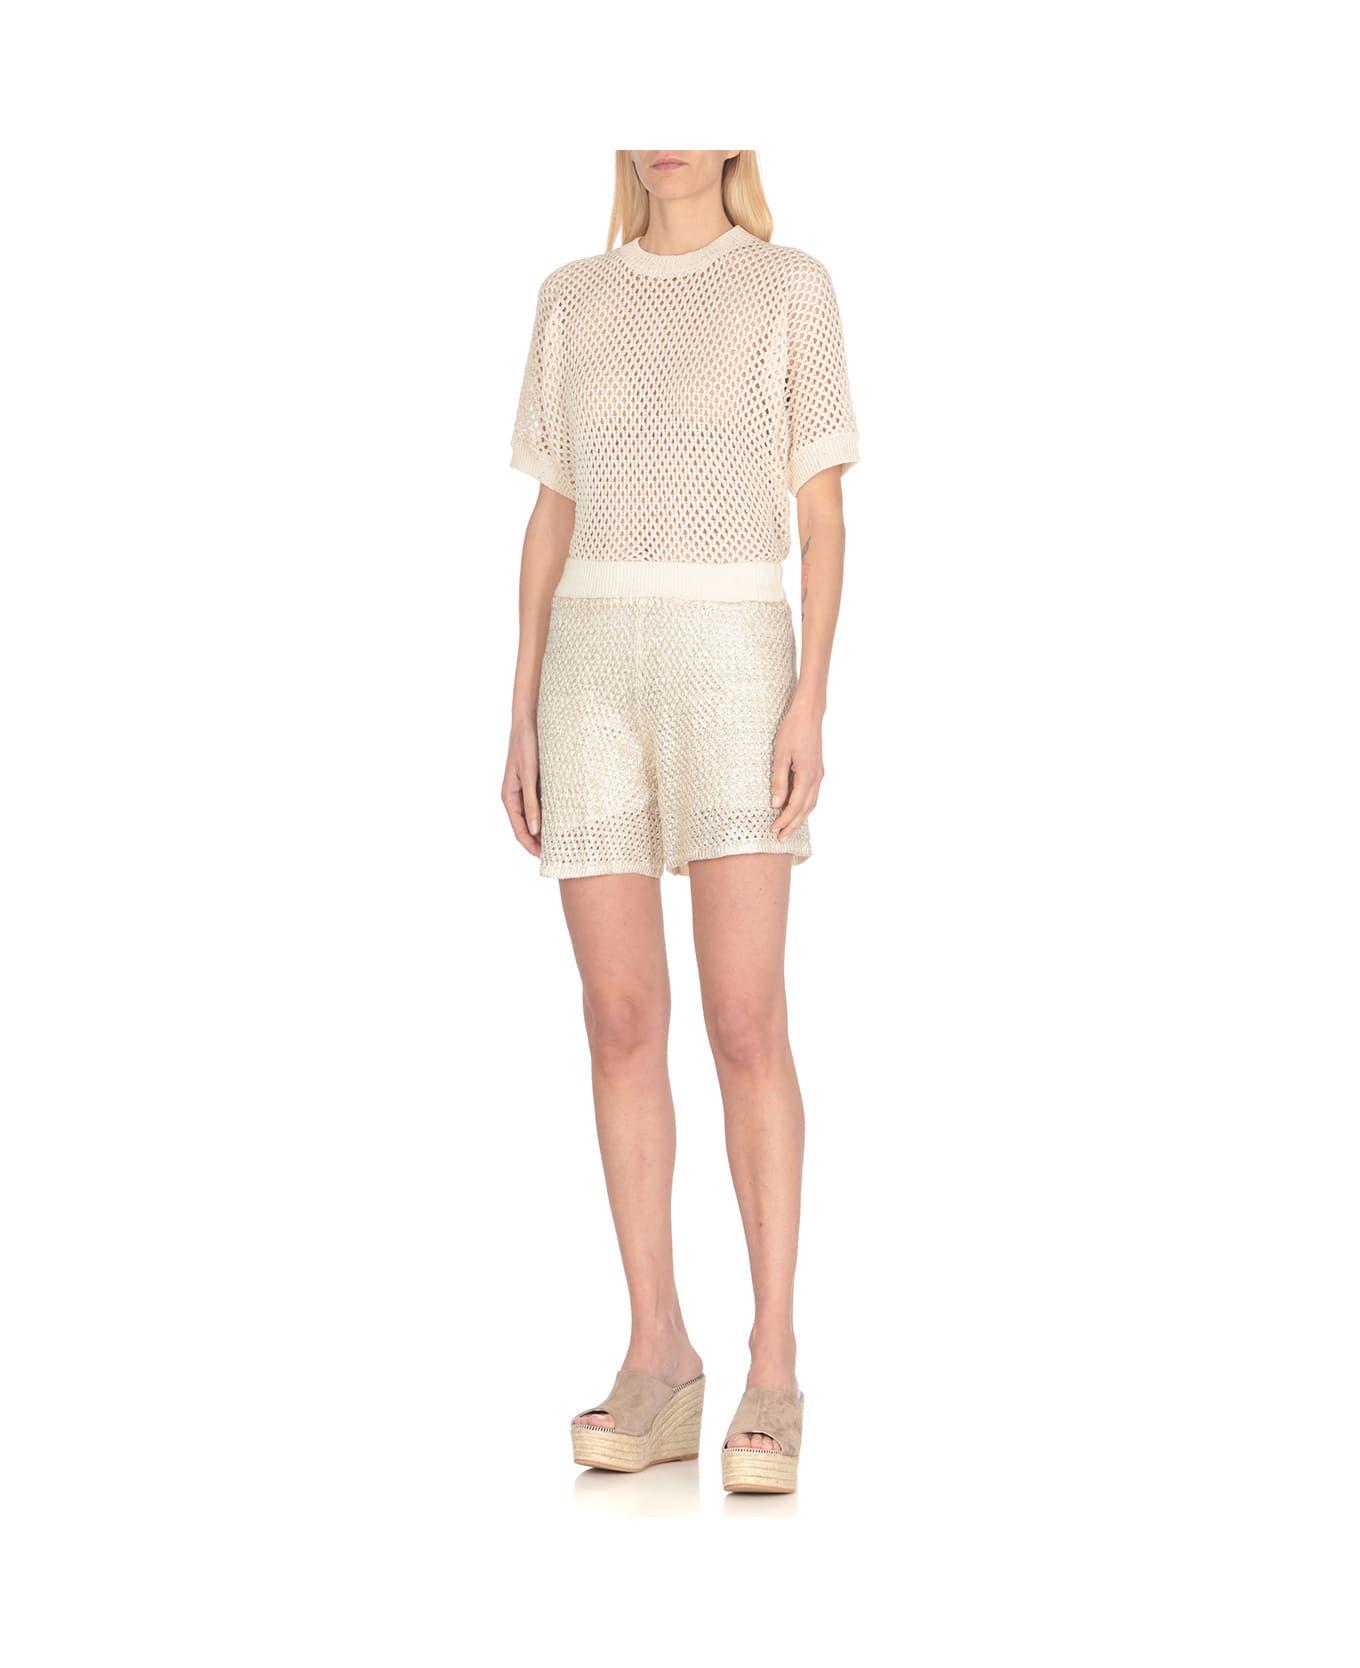 Peserico Linen Shorts - Ivory